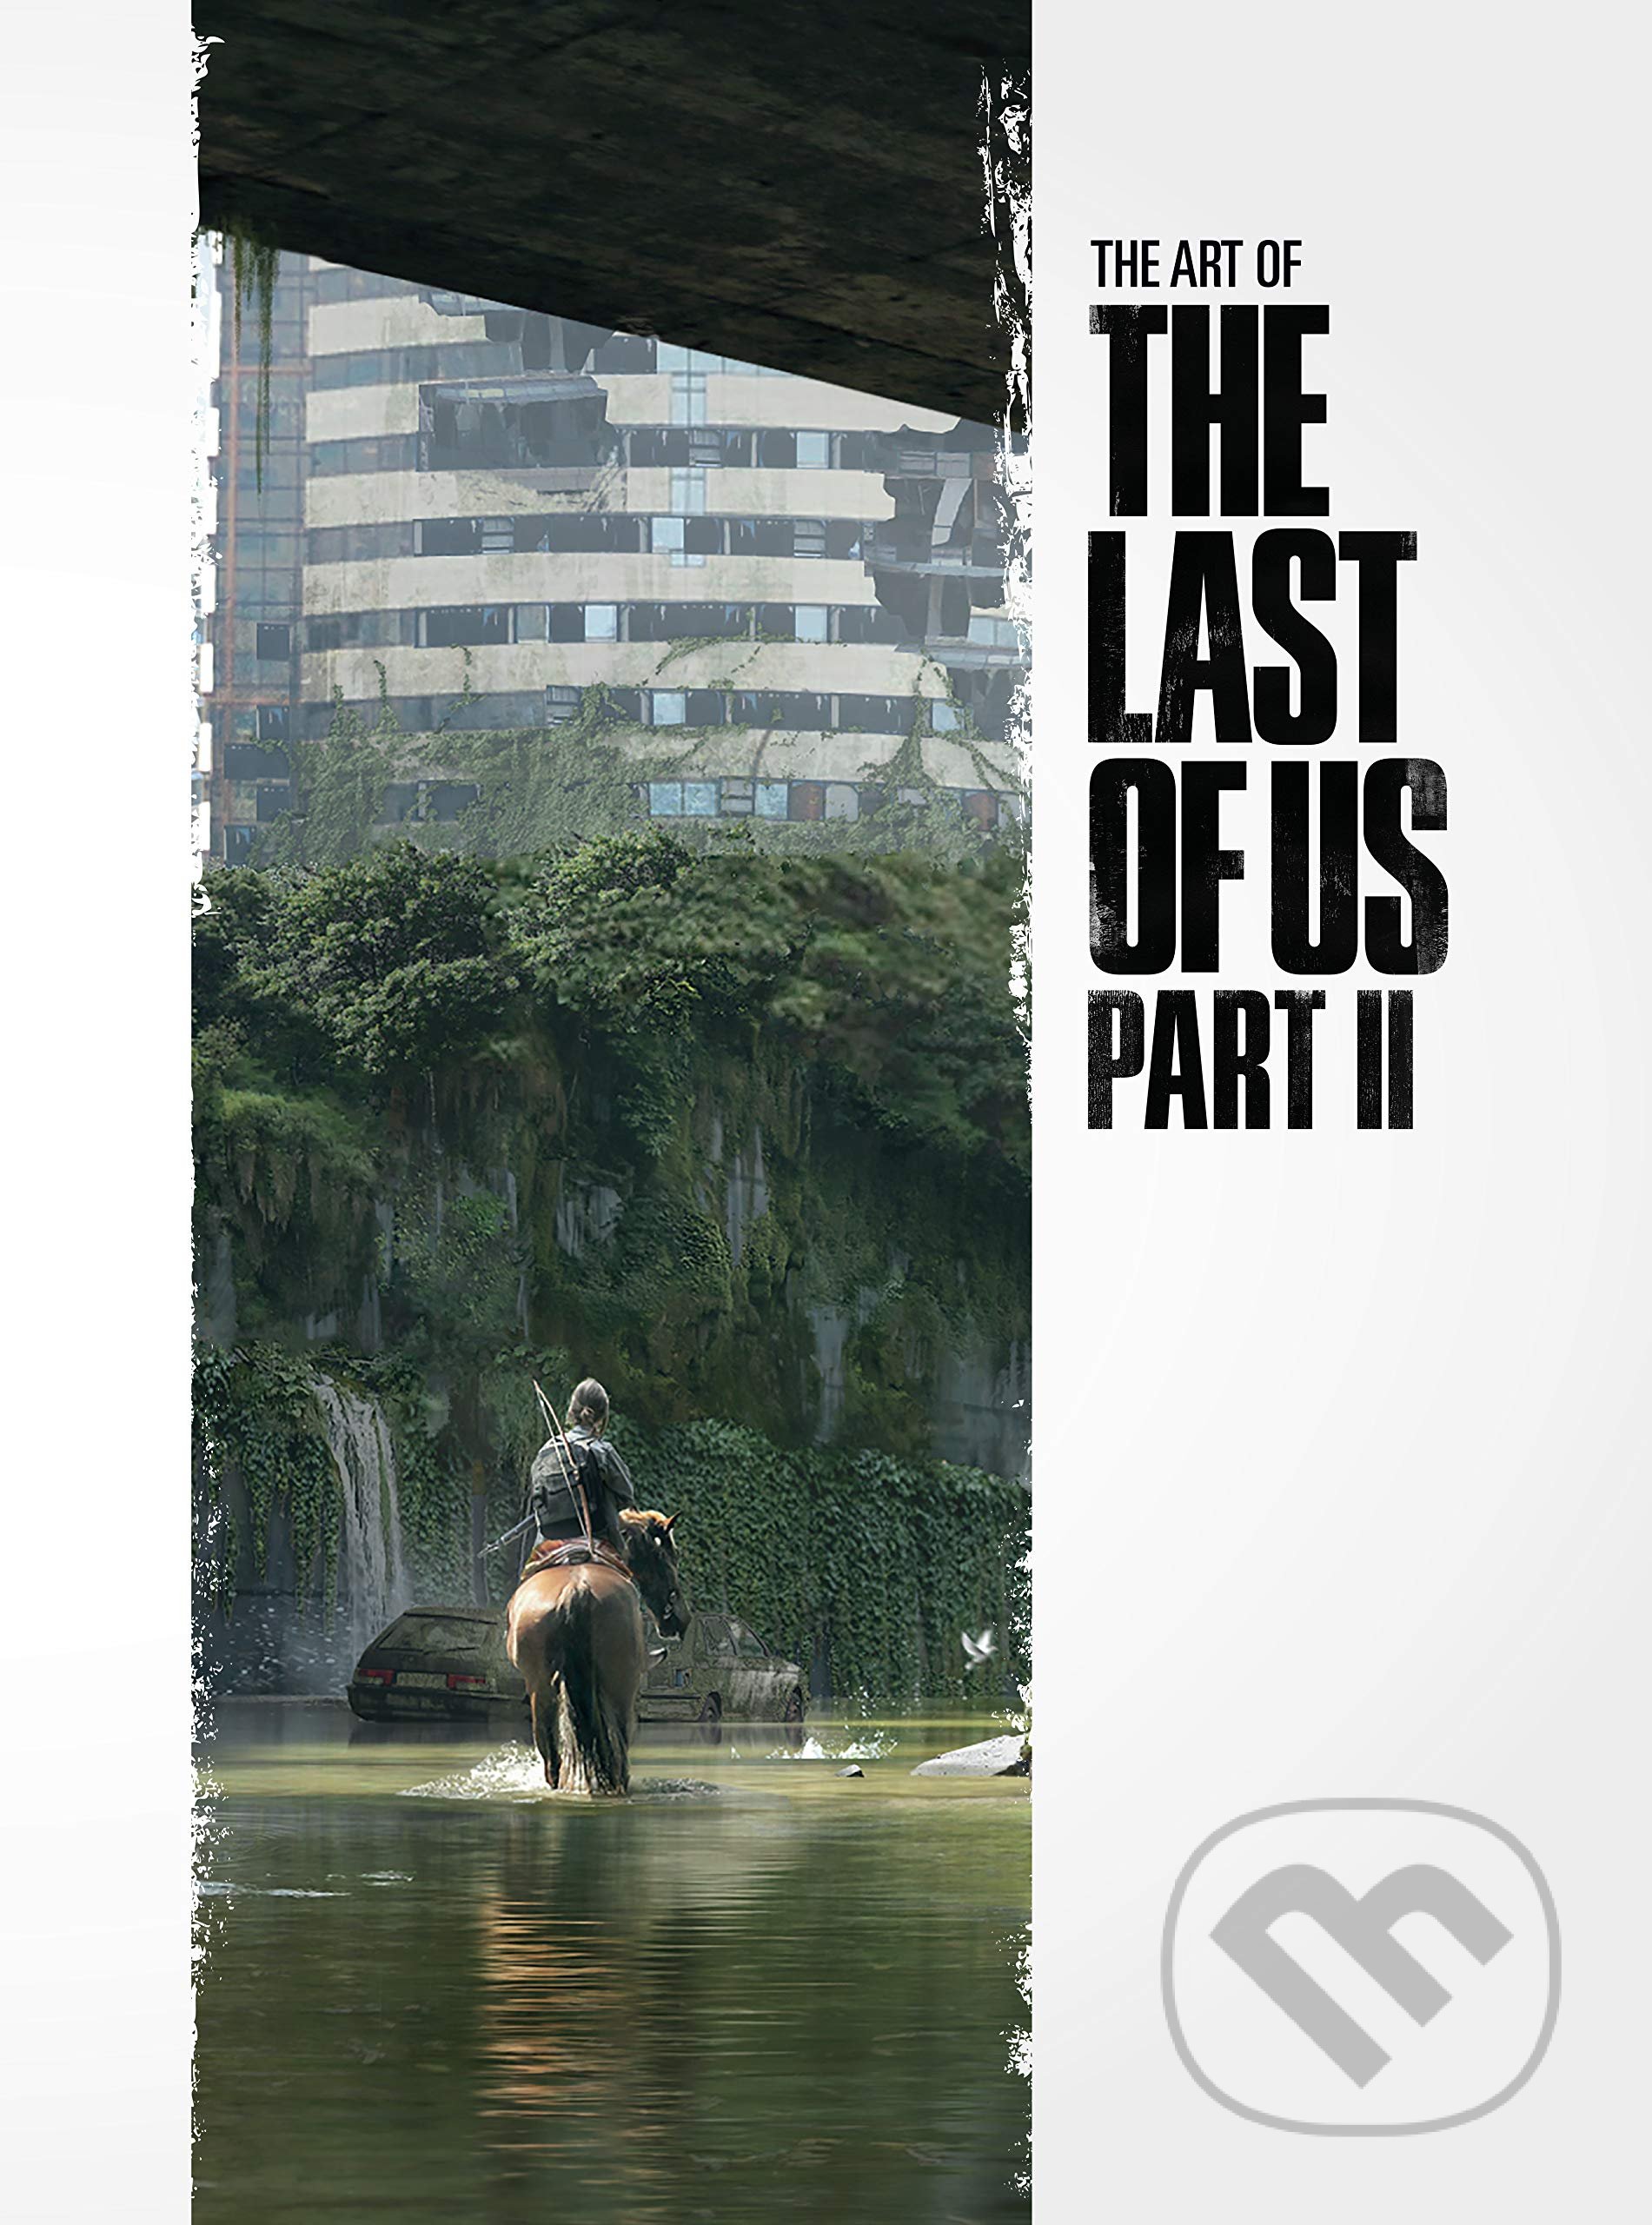 The Art of the Last of Us - Part II - Naughty Dog, Dark Horse, 2020